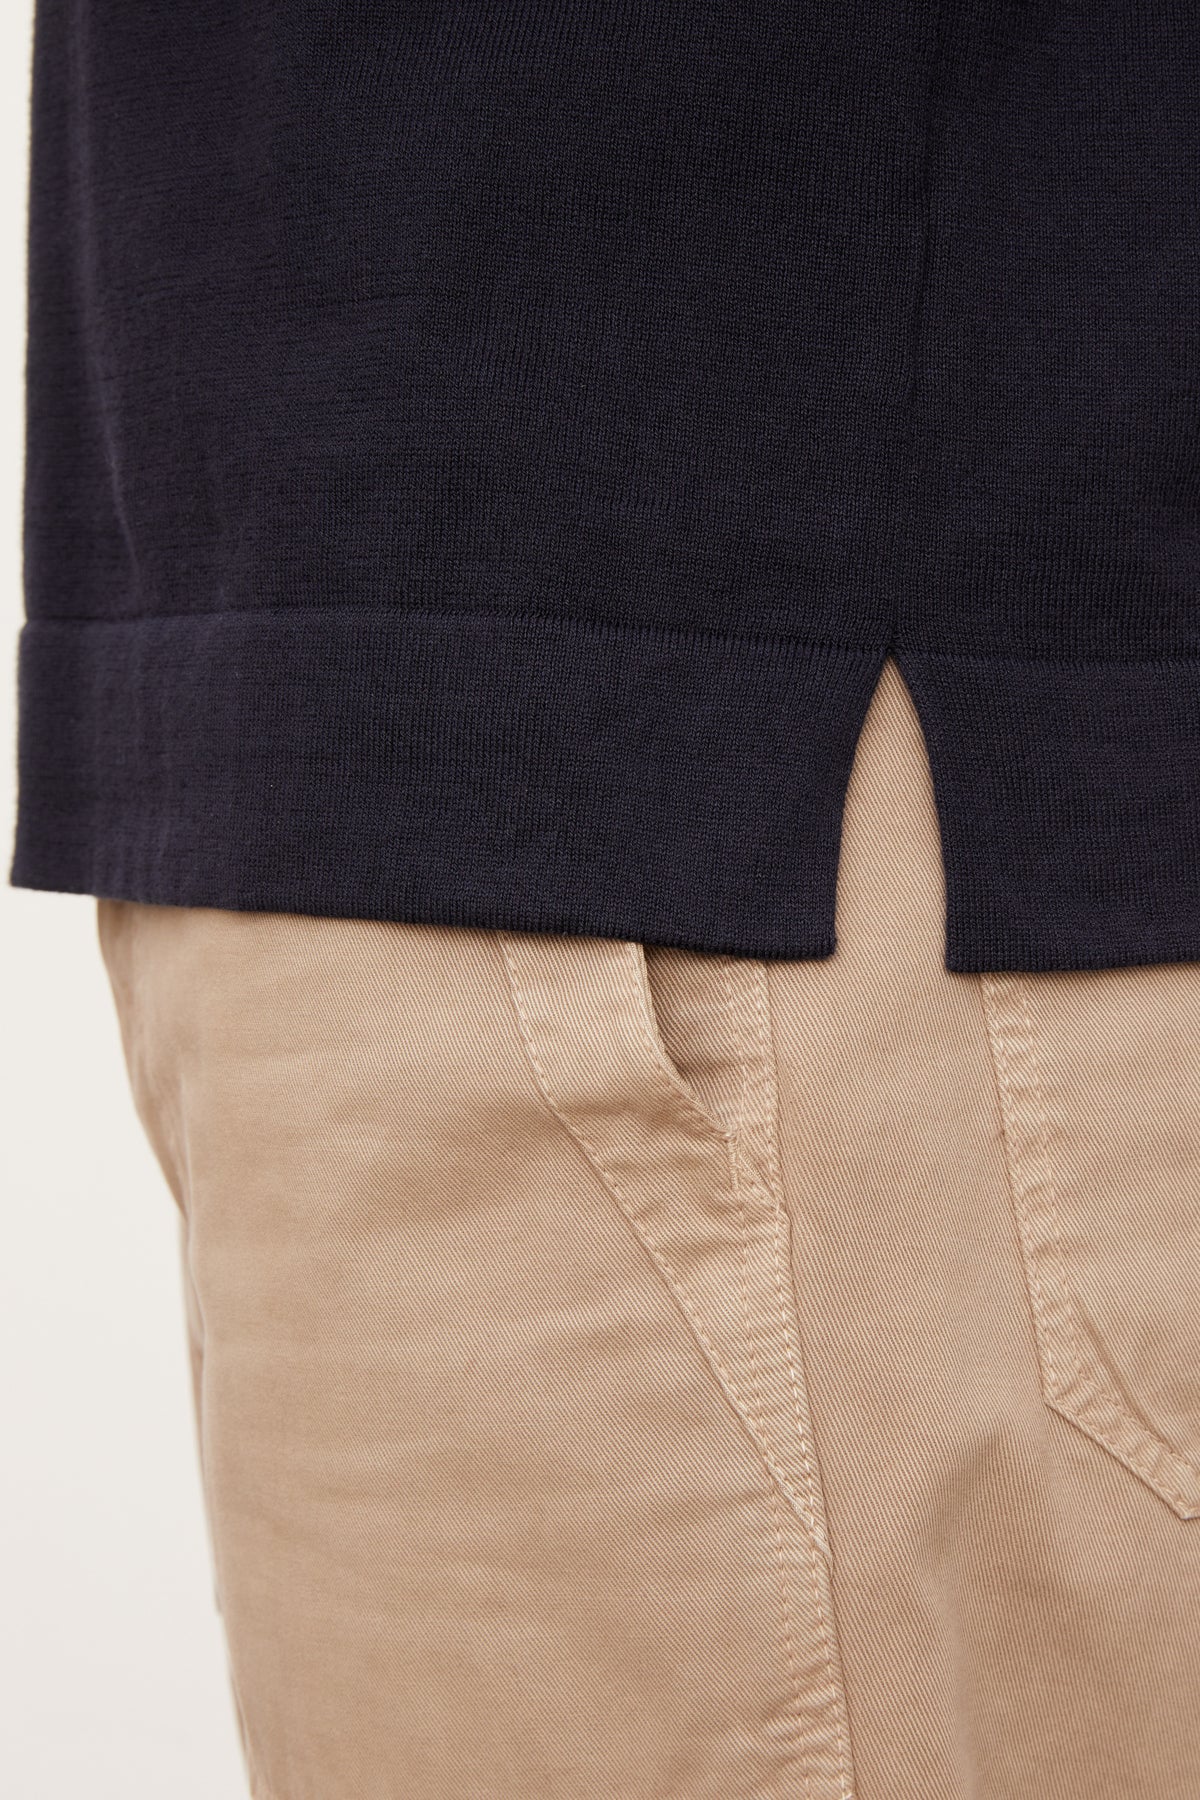 A man wearing a Velvet by Graham & Spencer tan RICO POLO shirt and khaki pants.-36009013805249